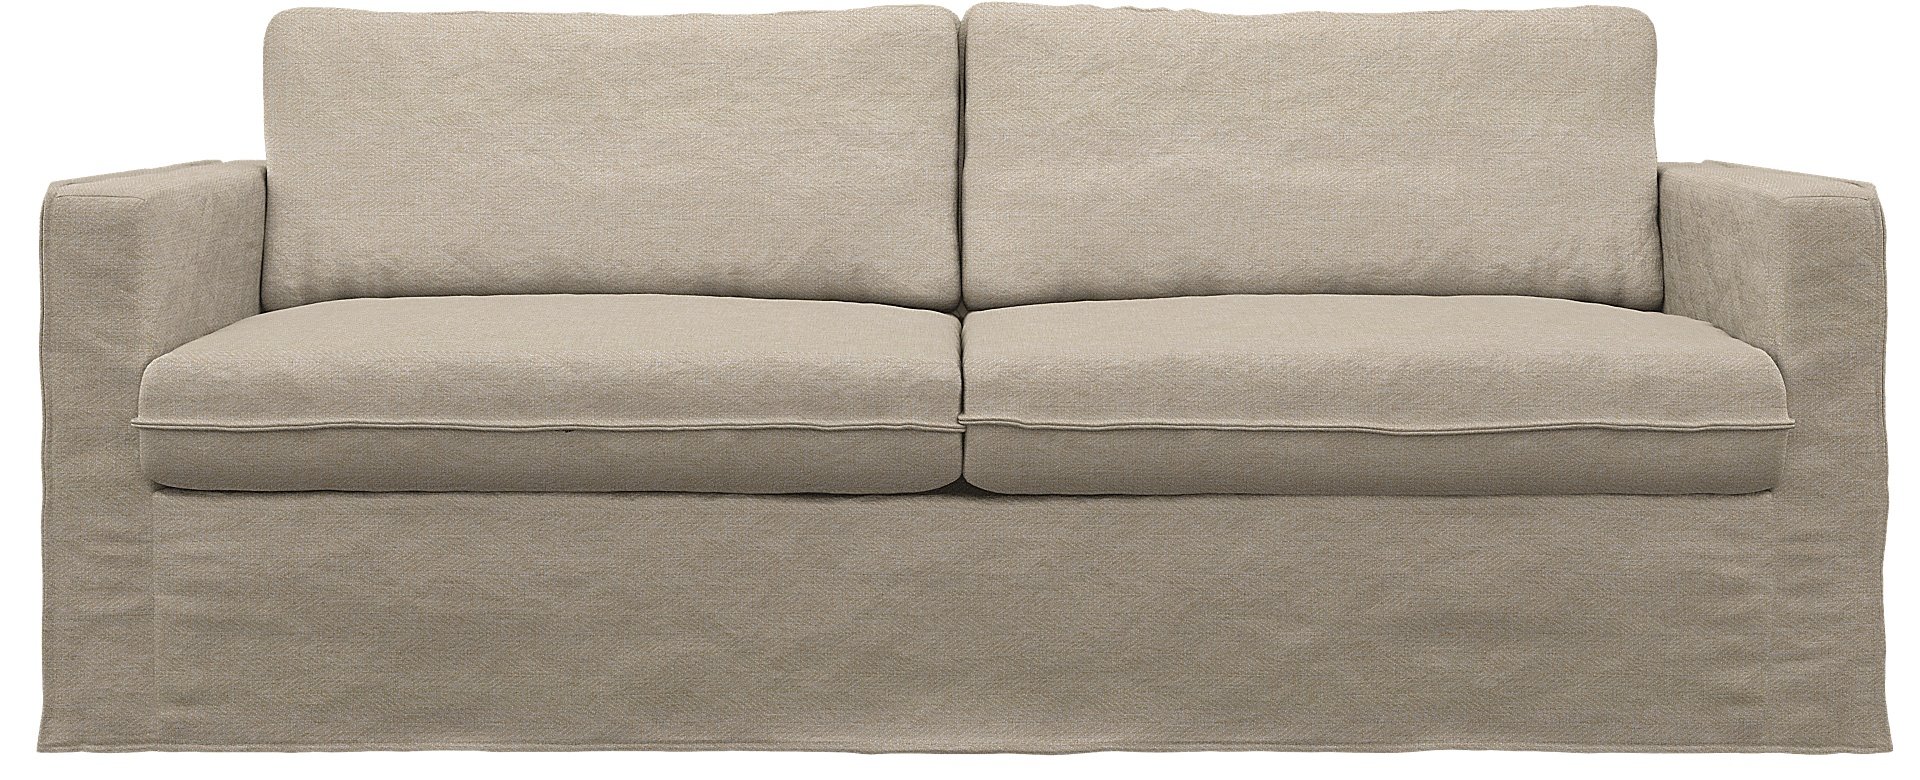 IKEA - Karlstad 3 Seater Sofa Cover, Natural, Boucle & Texture - Bemz